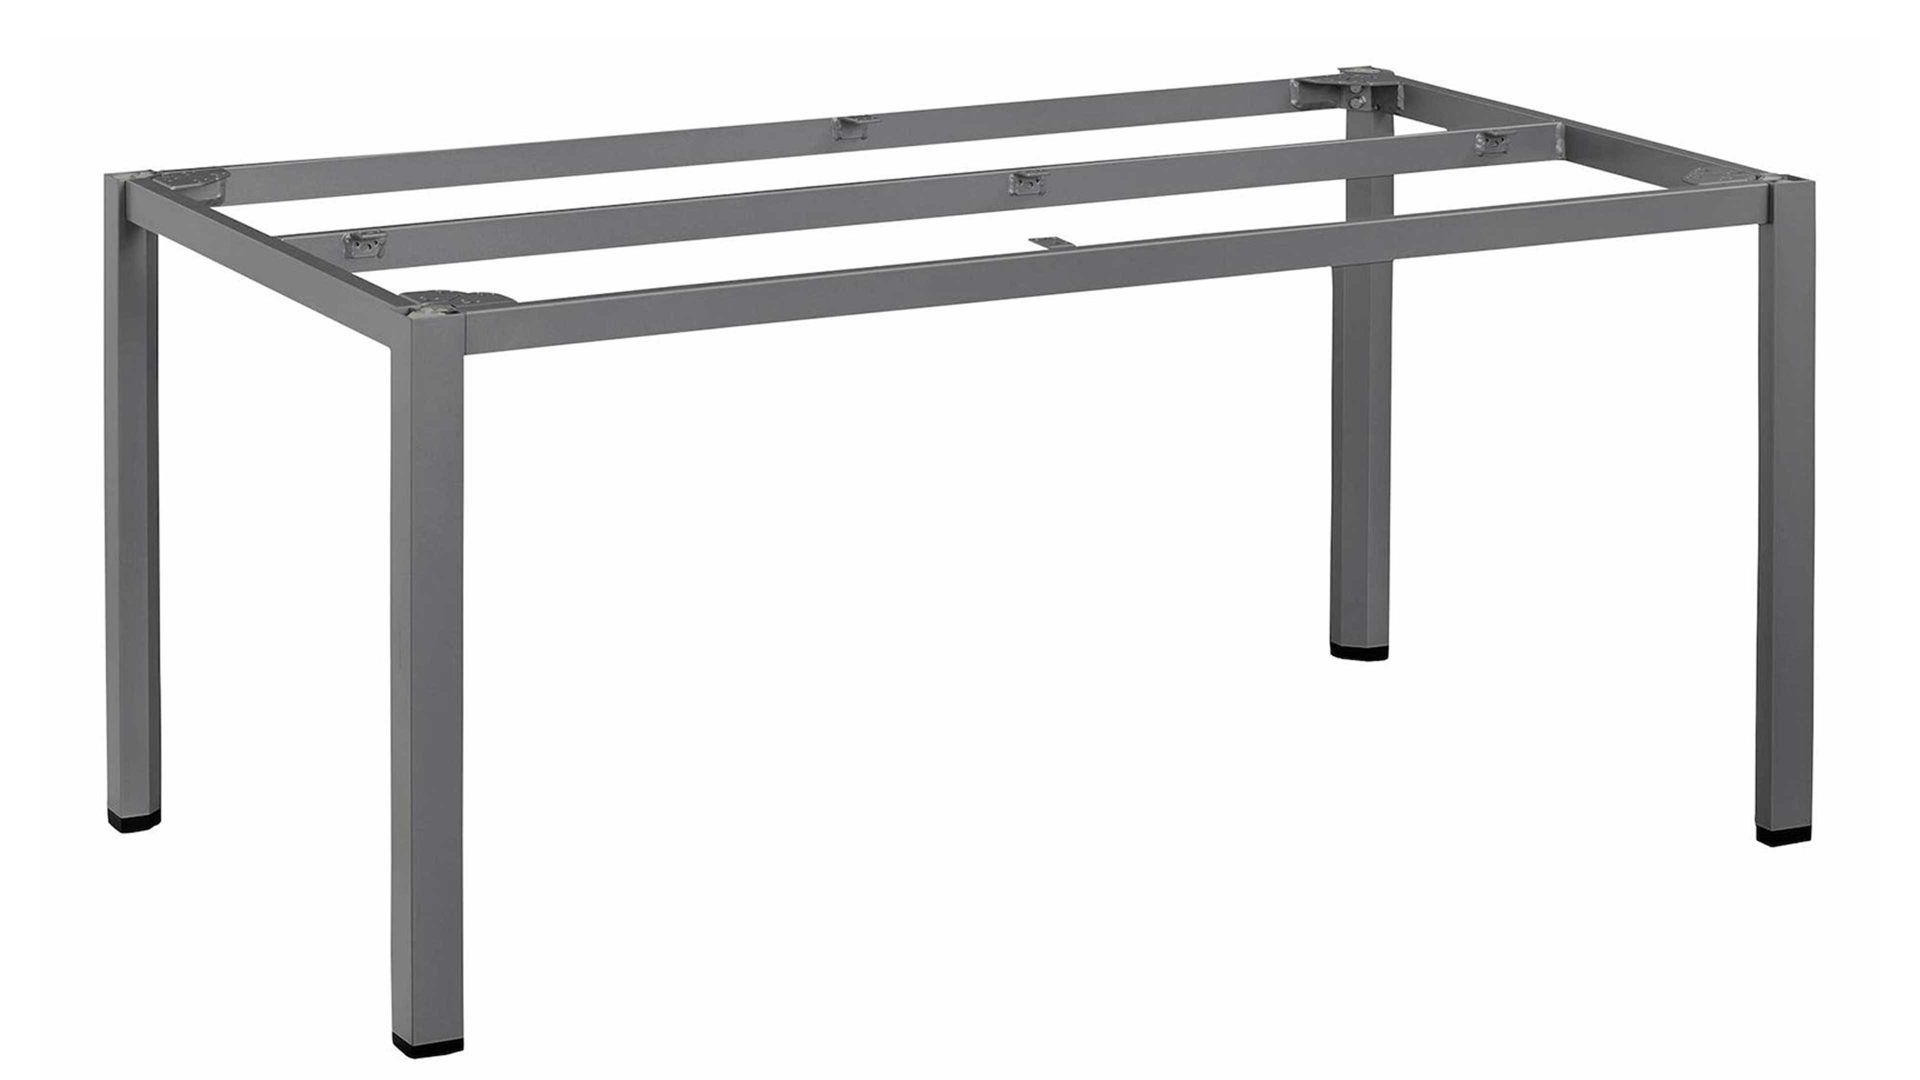 Tischgestell Kettler aus Metall in Anthrazit KETTLER Tischsystem Cubic - Tischgestell anthrazitfarbenes Aluminium - ca. 160 x 95 cm